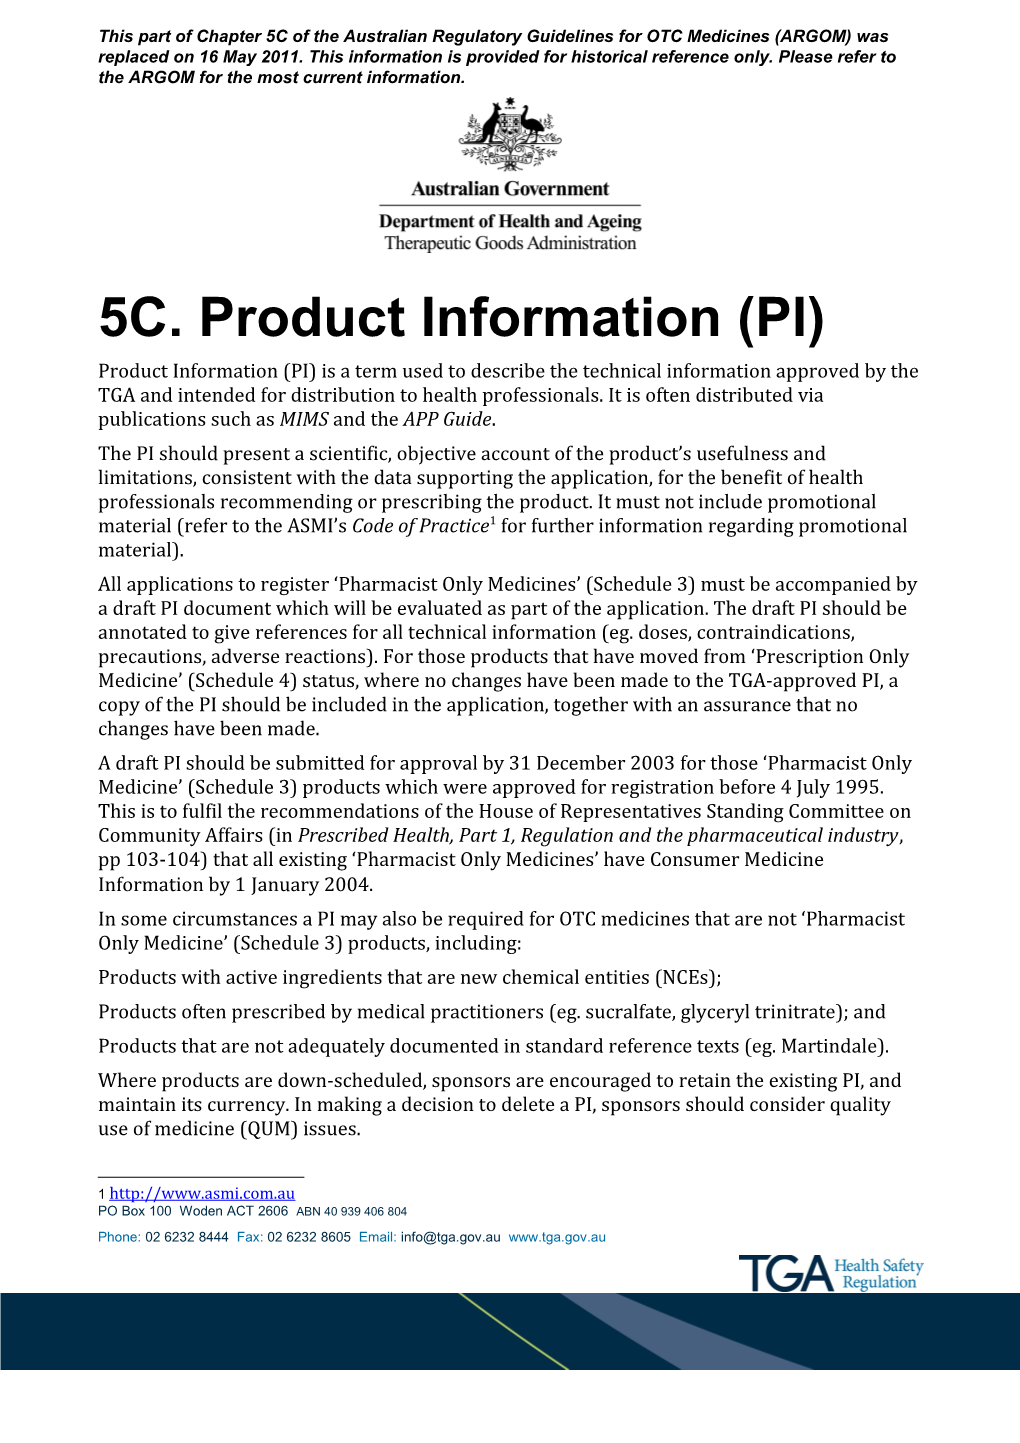 ARGOM: 5C. Product Information (PI)